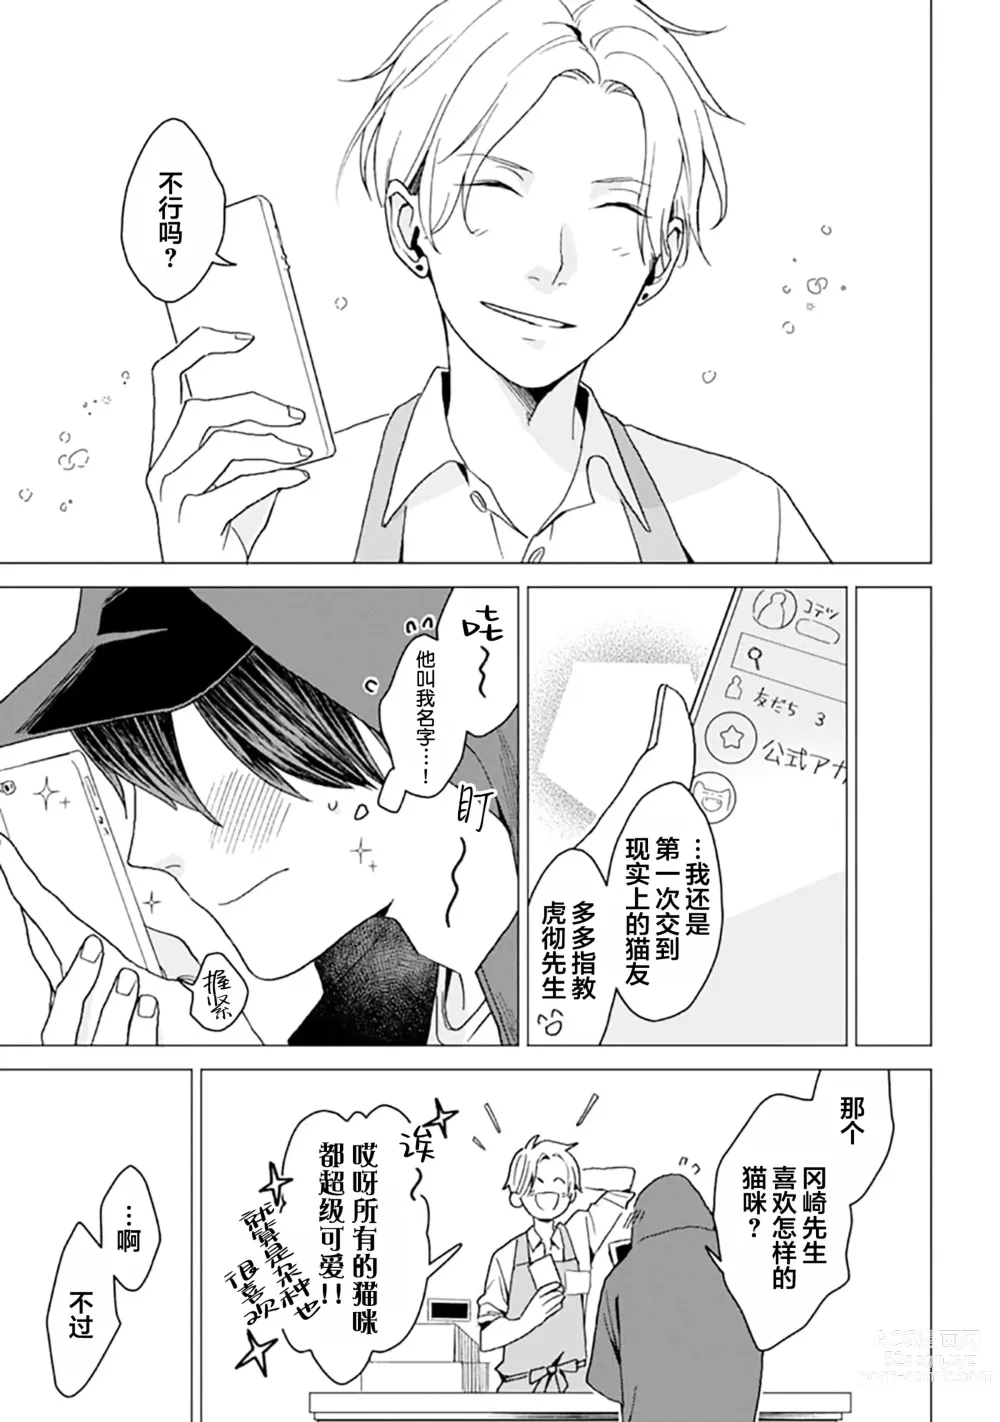 Page 7 of manga 恋爱中的猫咪想被抚摸